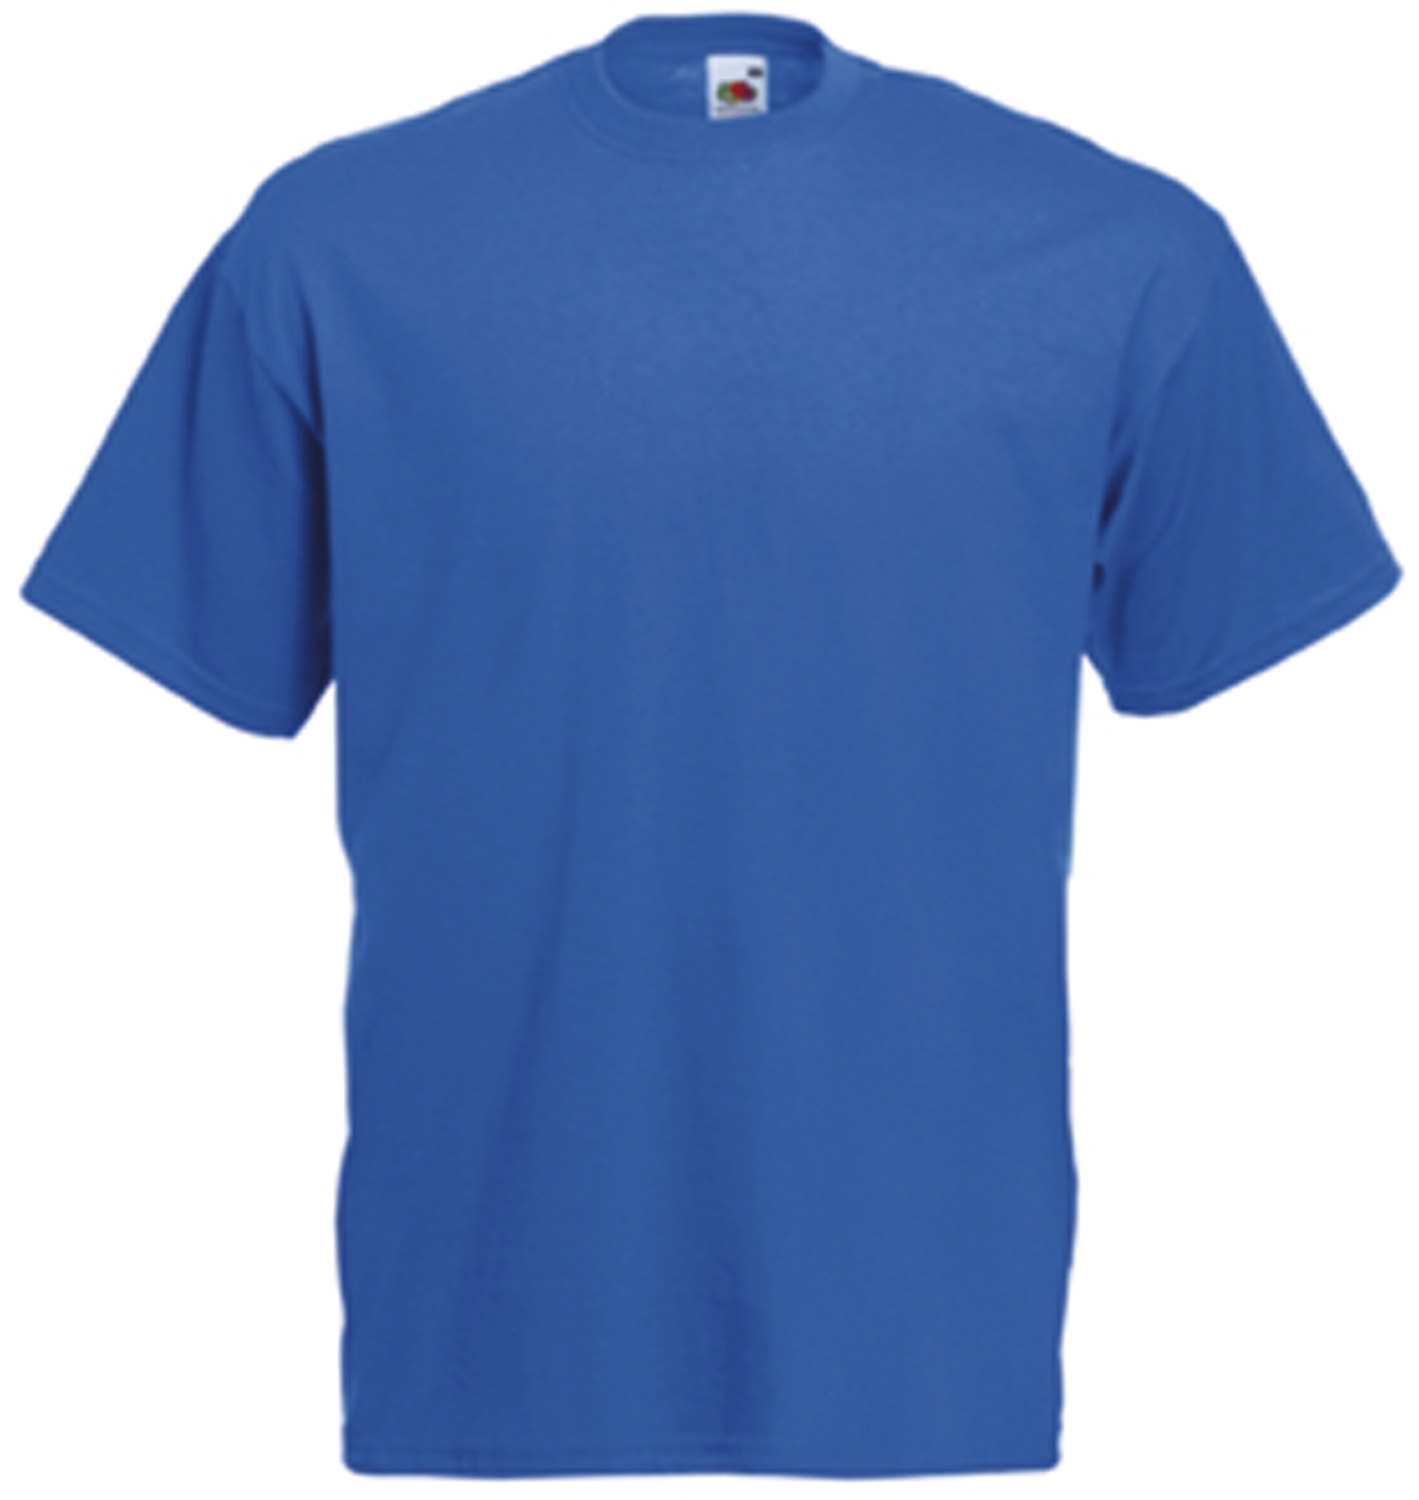 Tee-shirt Value-Weight Bleu royal Fruit Of The Loom